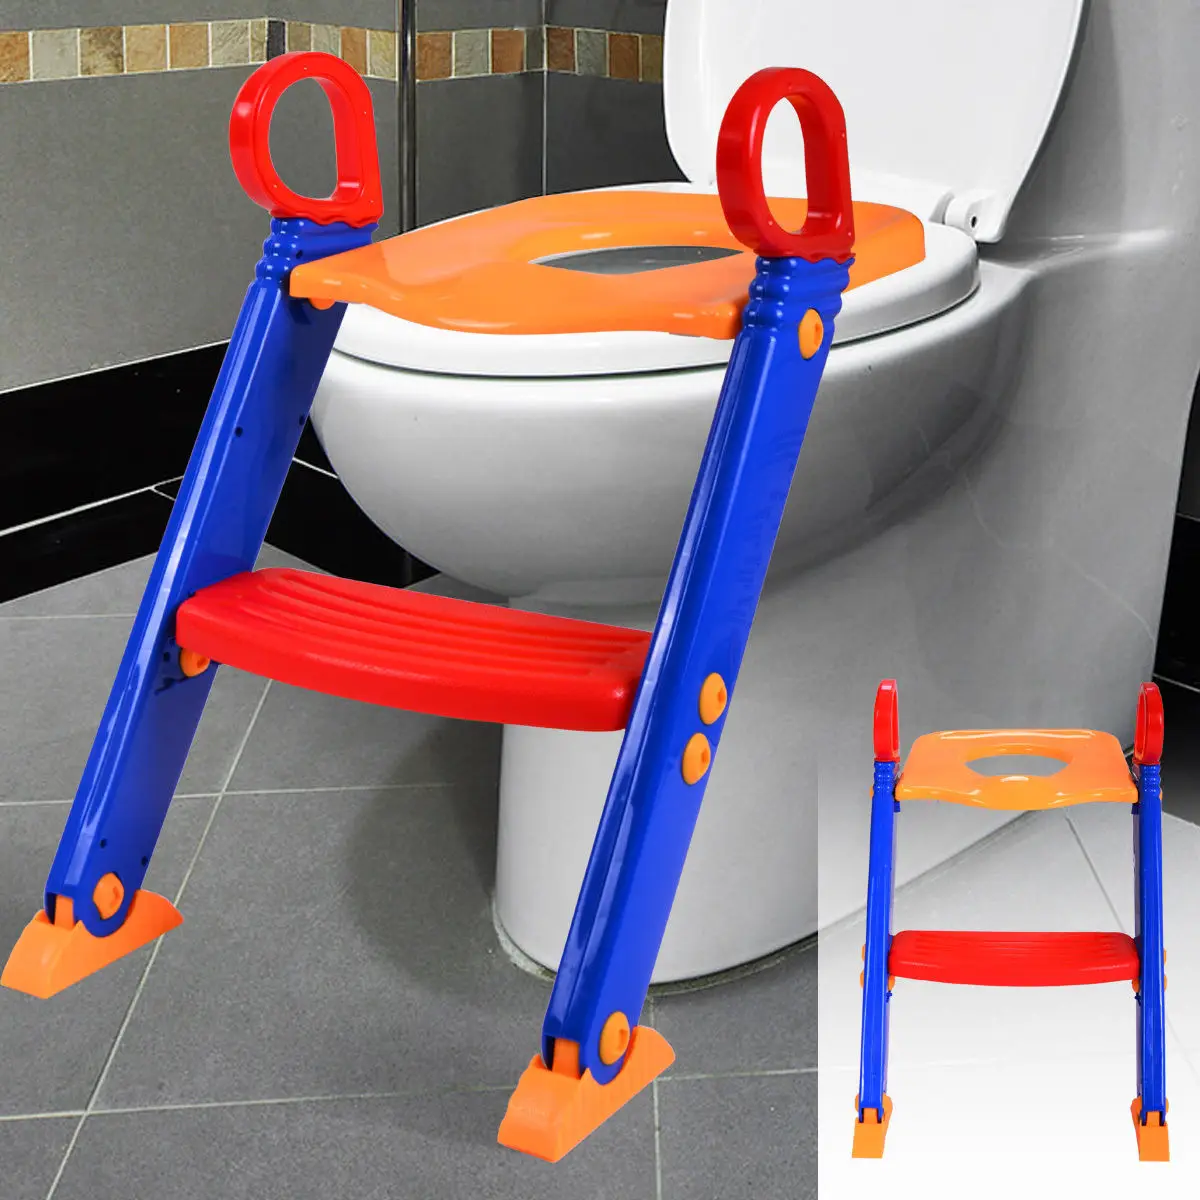 Children's toilet trainer baby's toliet seat bath stool